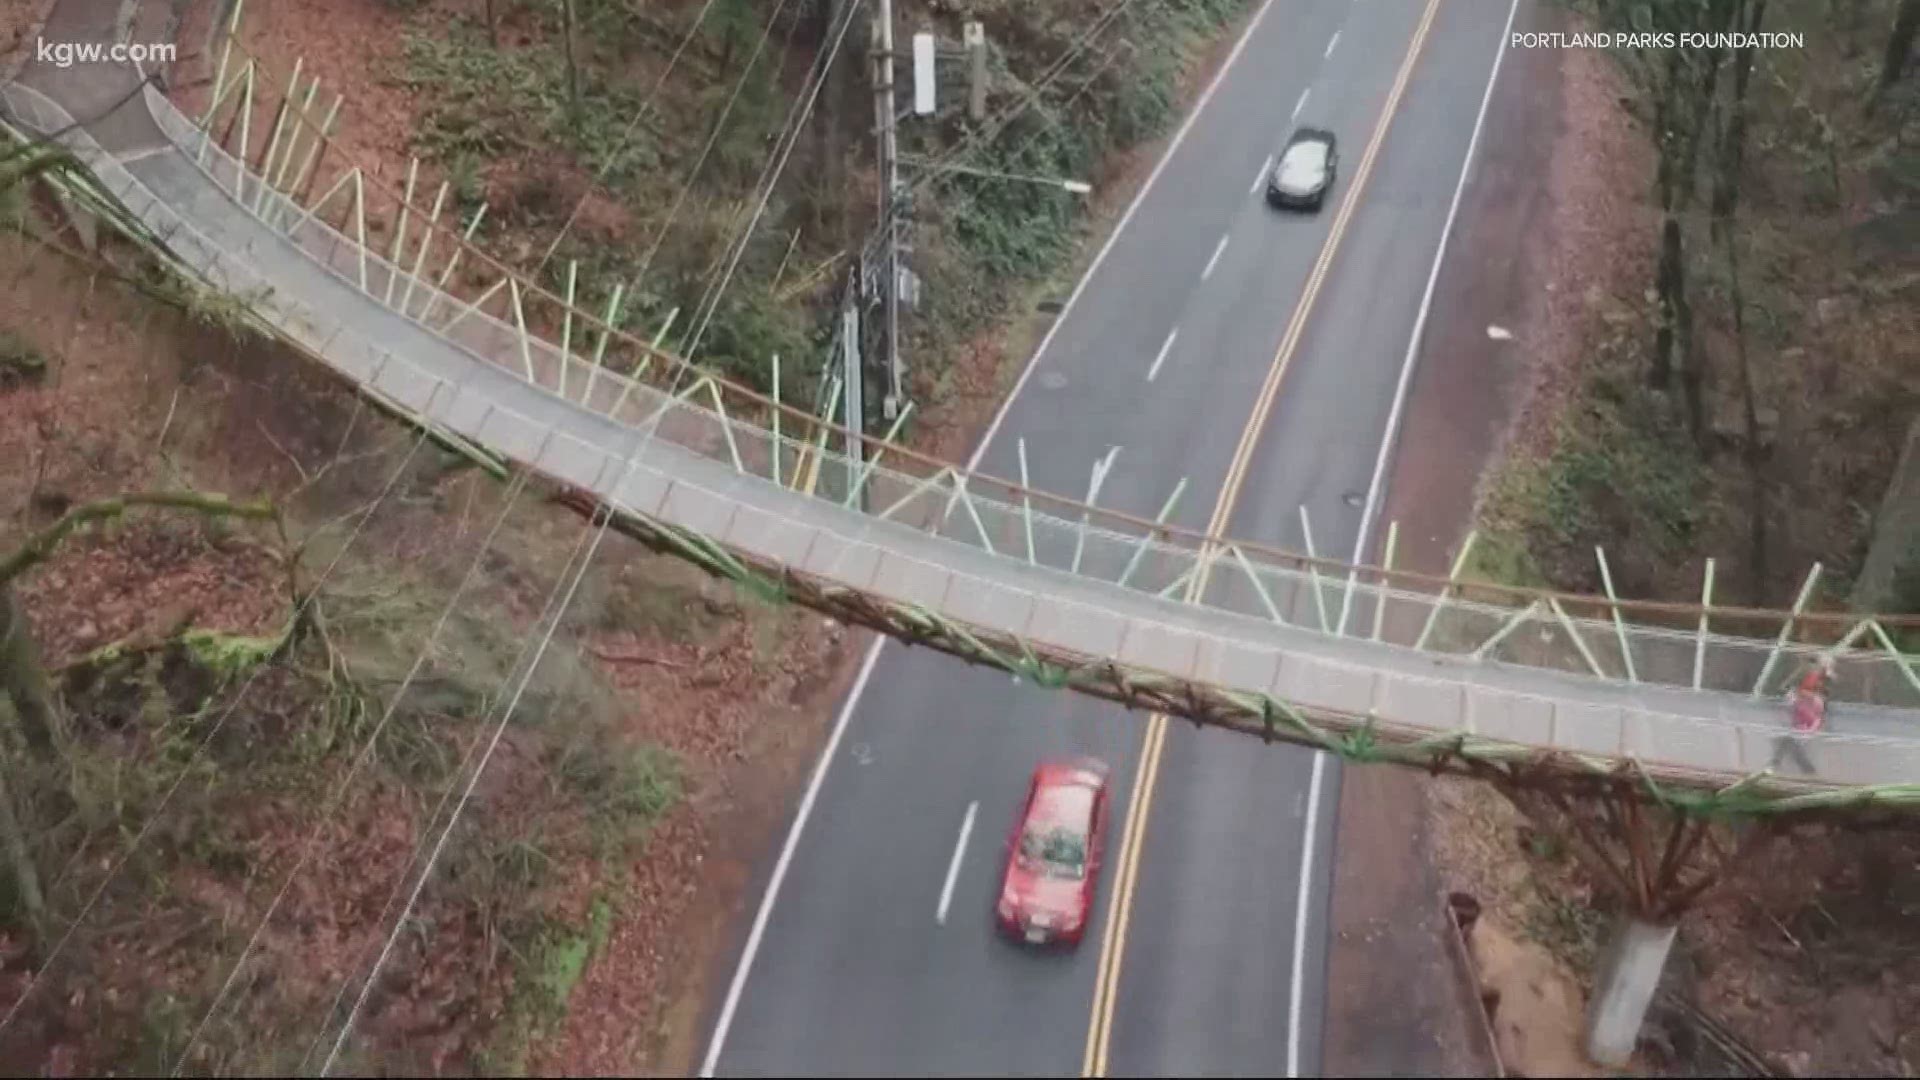 Portland's new footbridge on the Wildwood Trail is now an international award winner for public art!